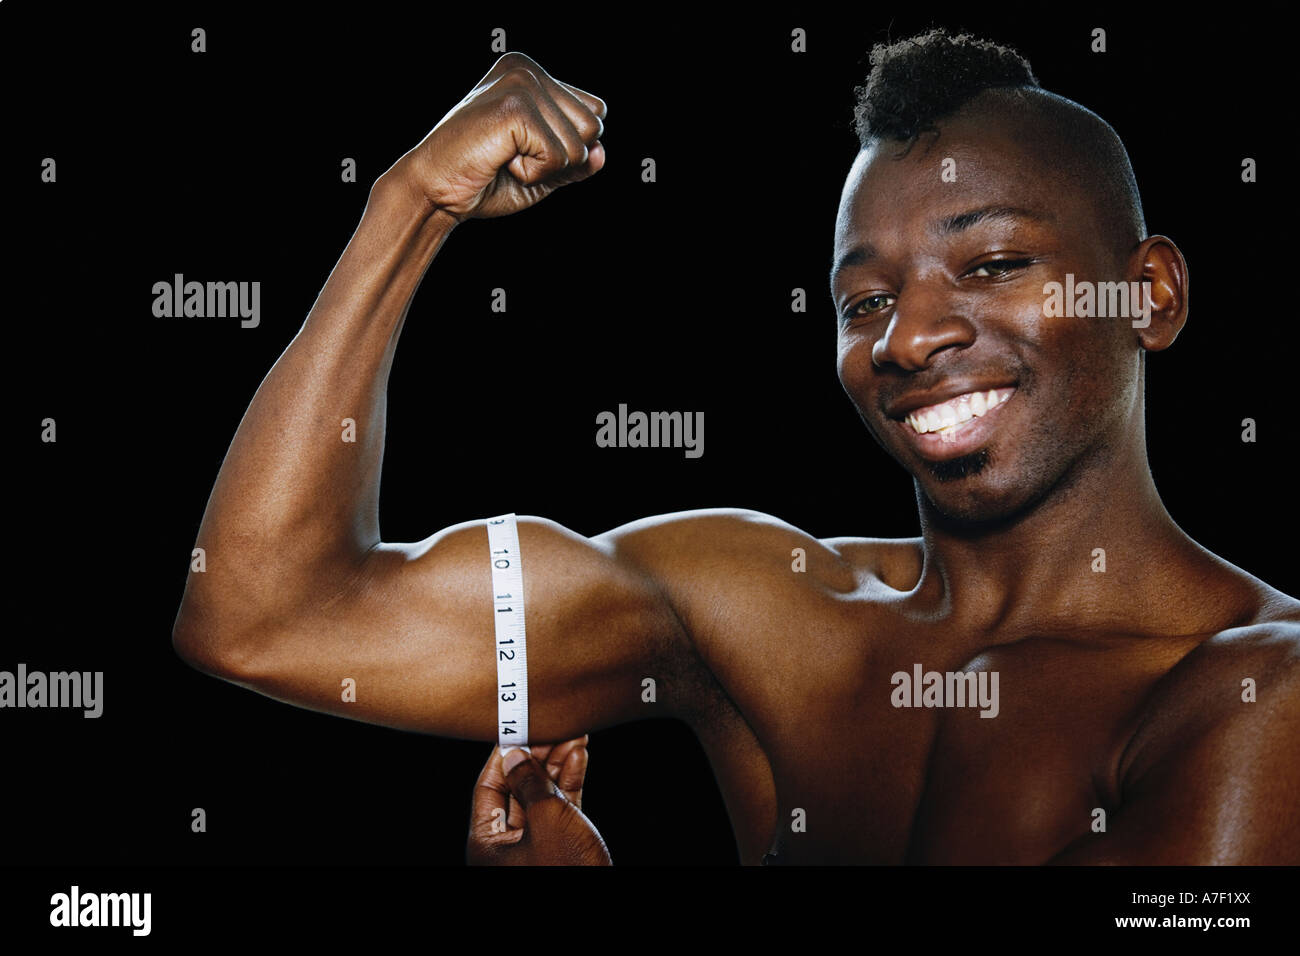 https://c8.alamy.com/comp/A7F1XX/african-man-measuring-flexed-biceps-A7F1XX.jpg